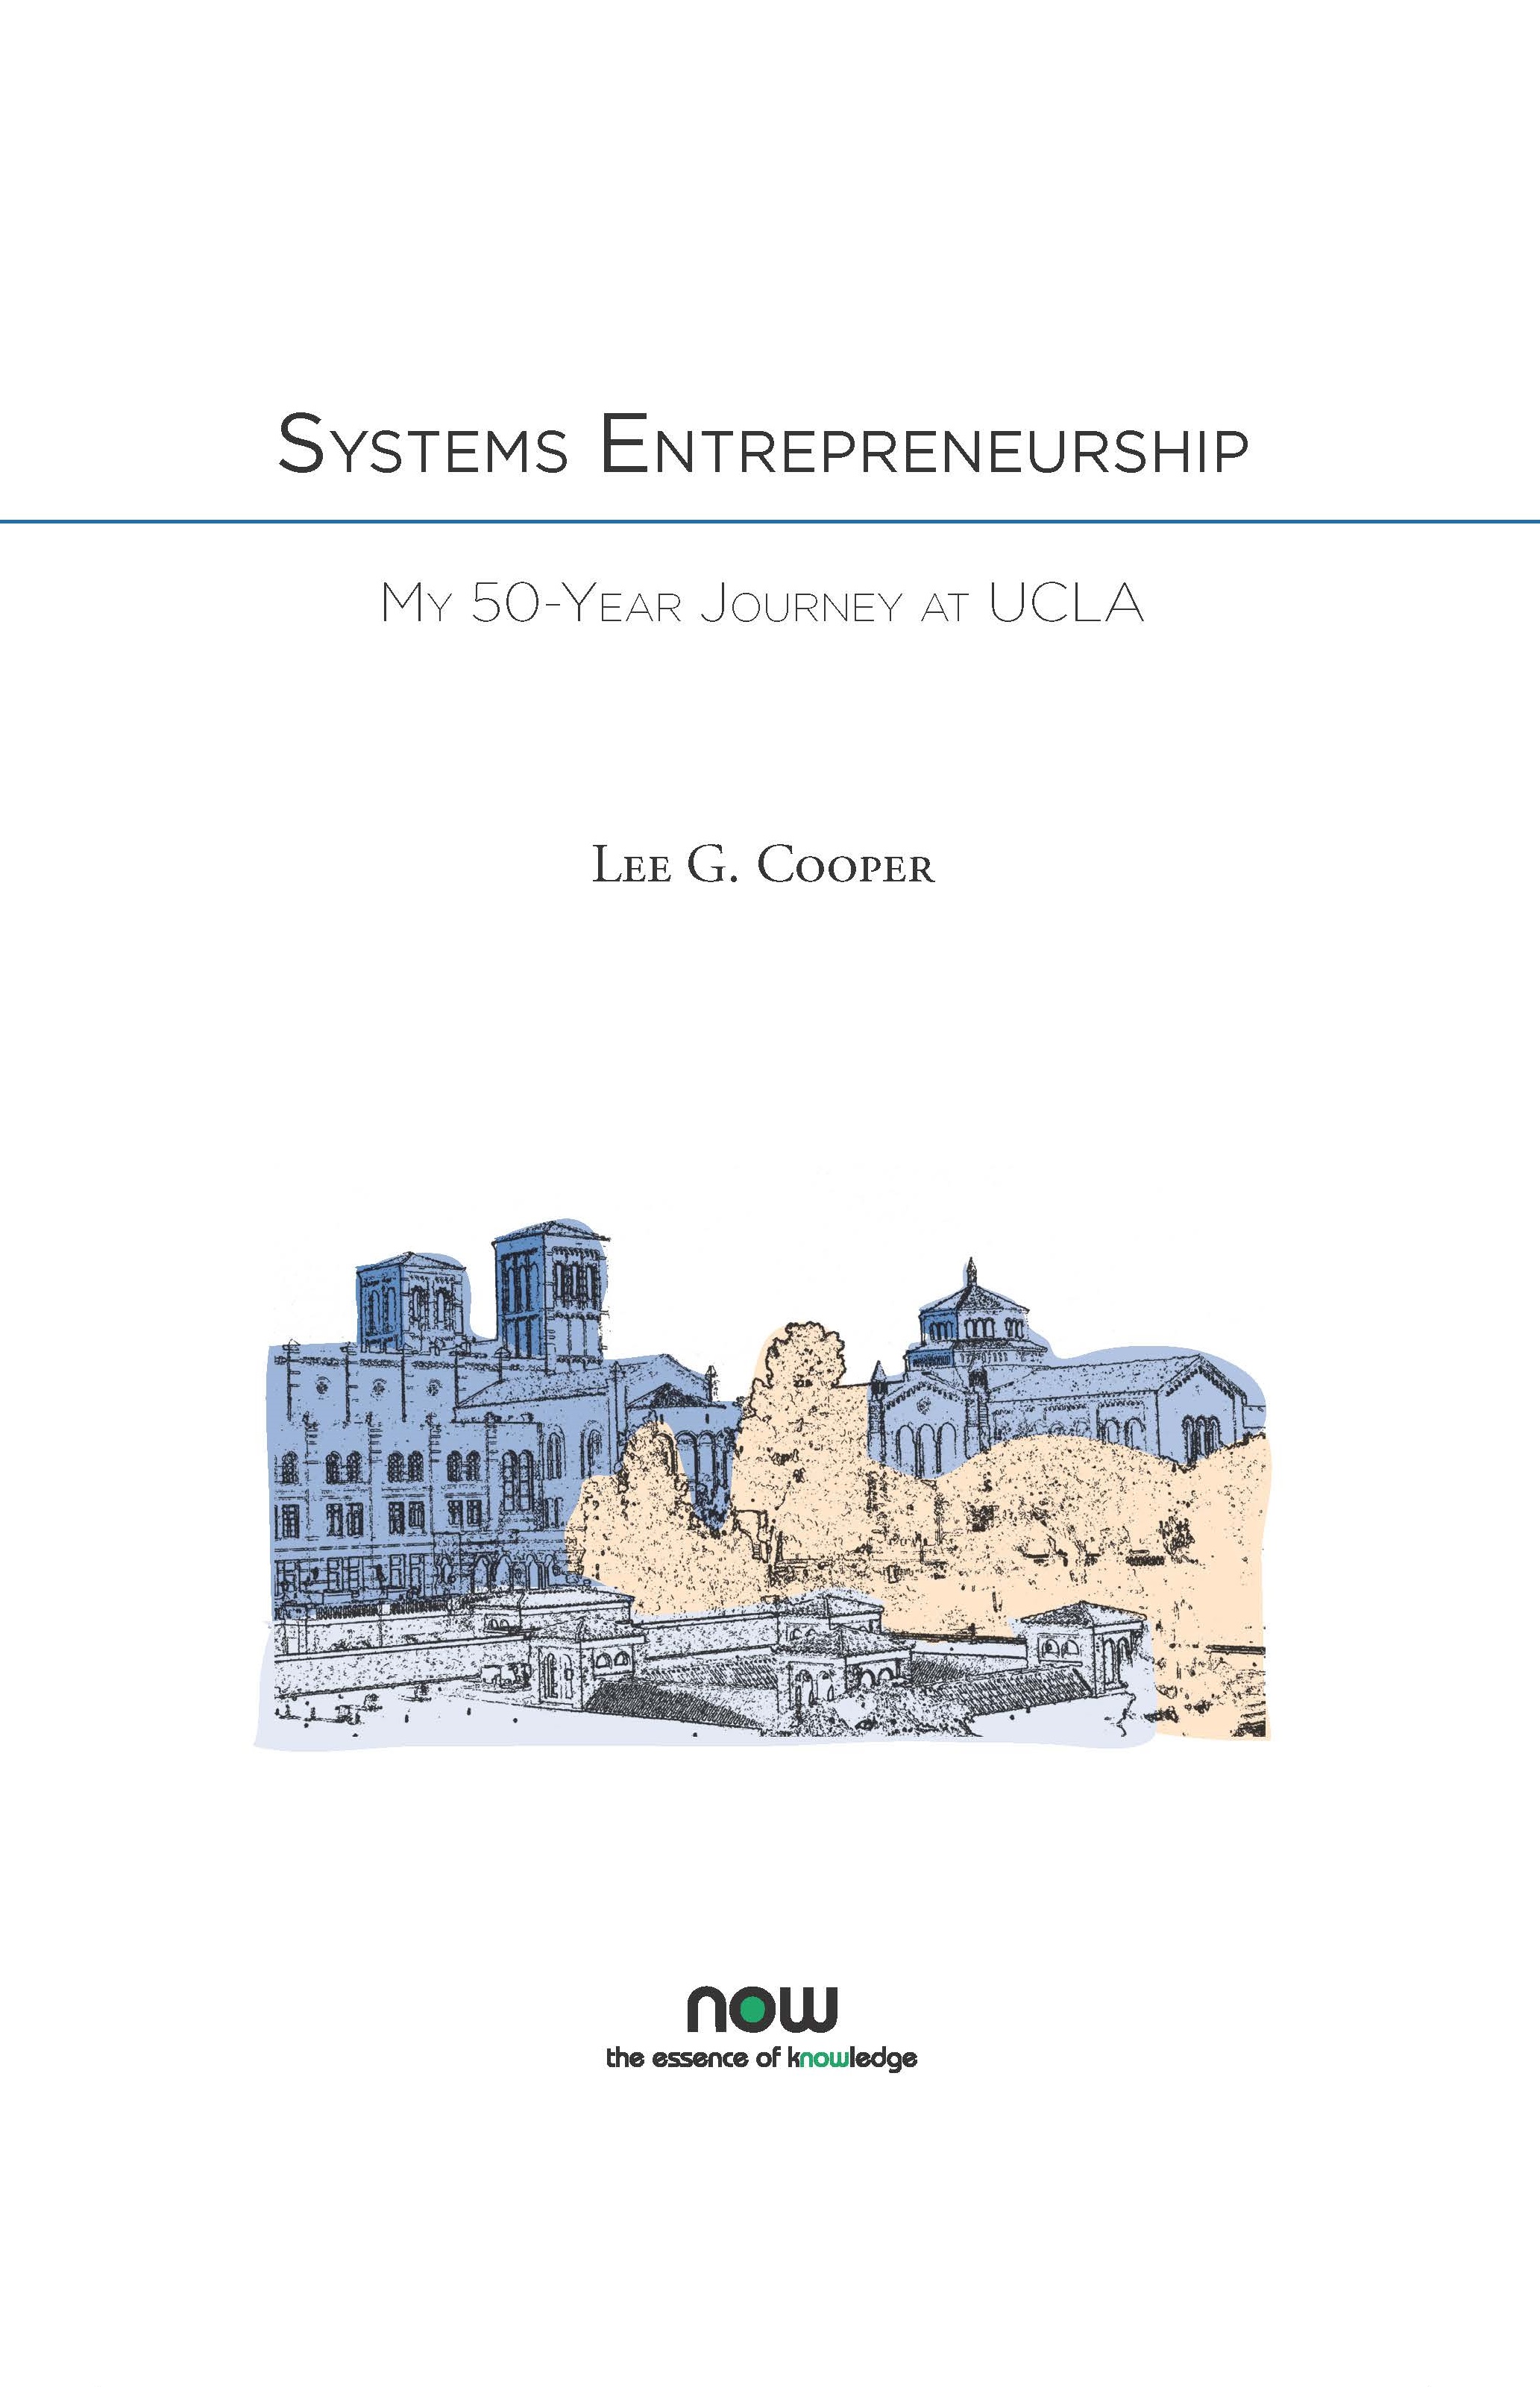 Systems Entrepreneurship: My 50-Year Journey at UCLA
